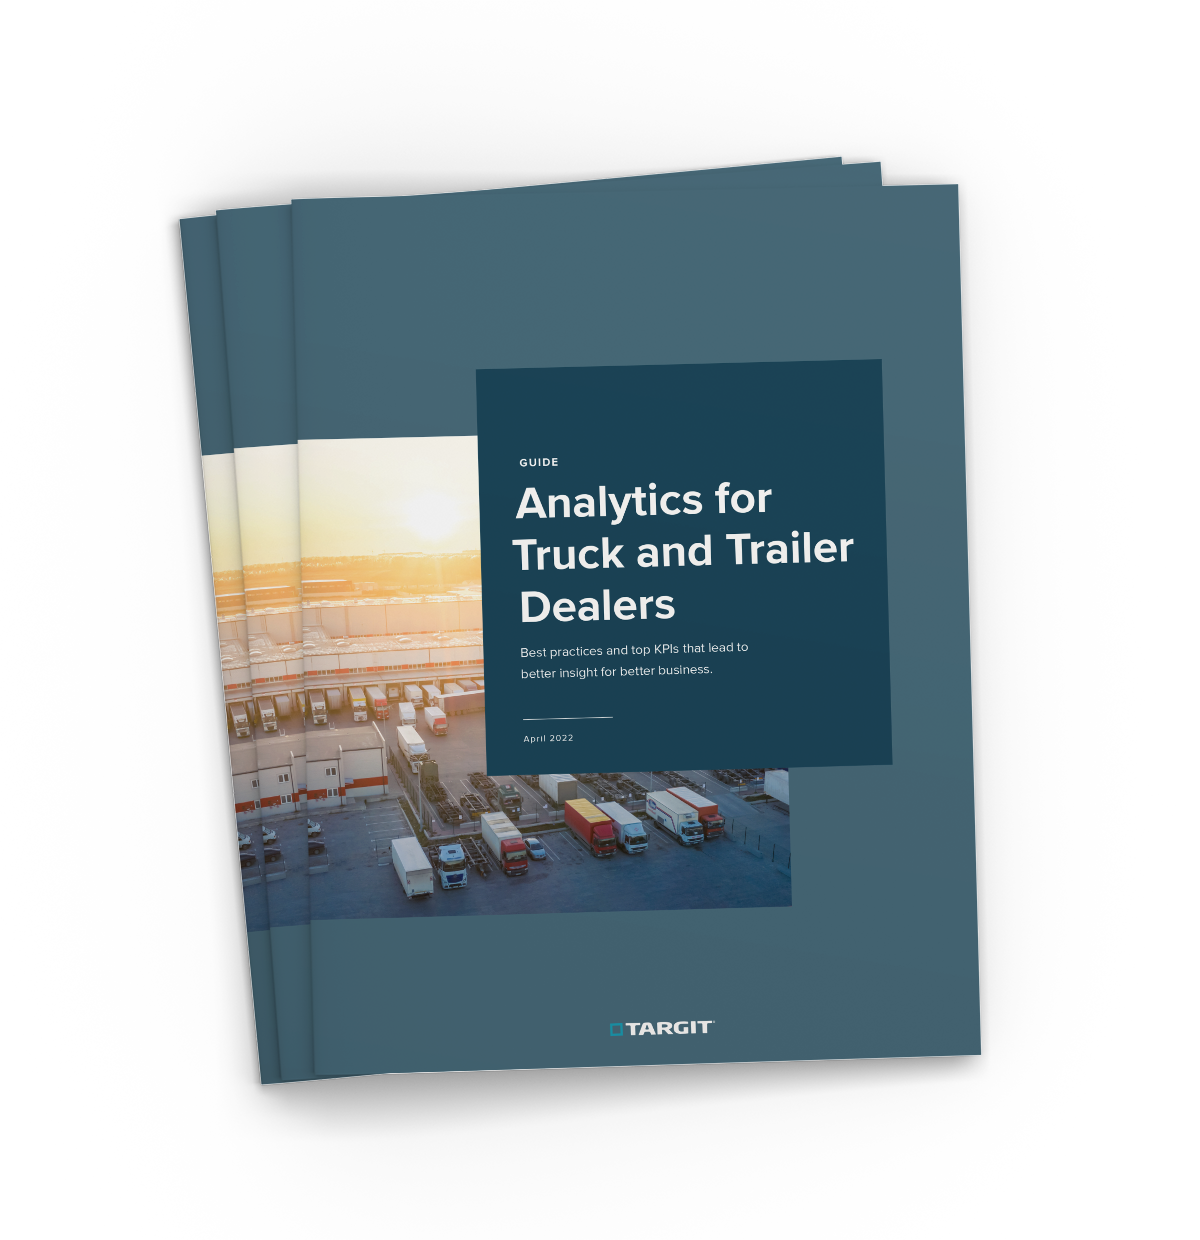 Analytics for Truck and Trailer Dealers - TARGIT Guide